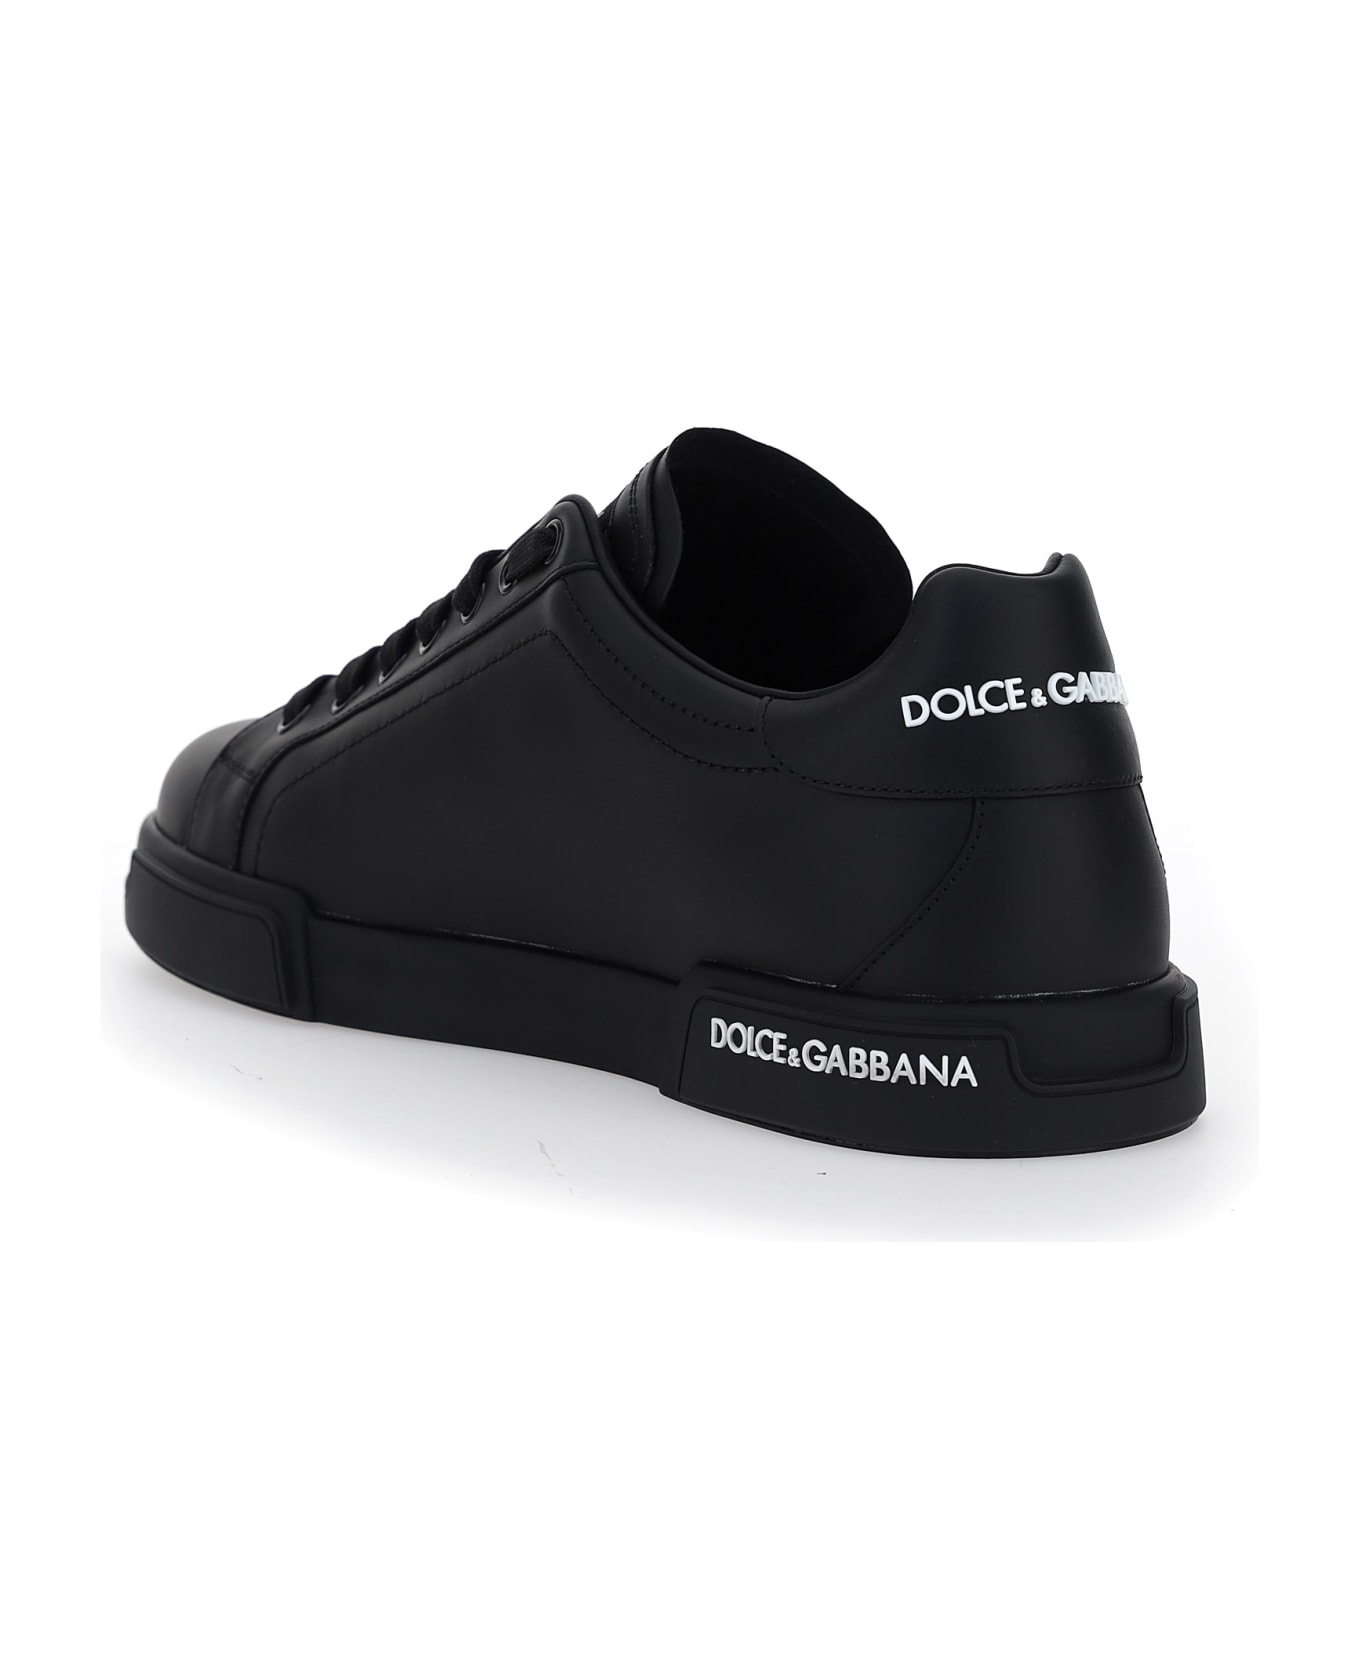 Dolce & Gabbana Portofino Black Leather Sneakers - Black スニーカー